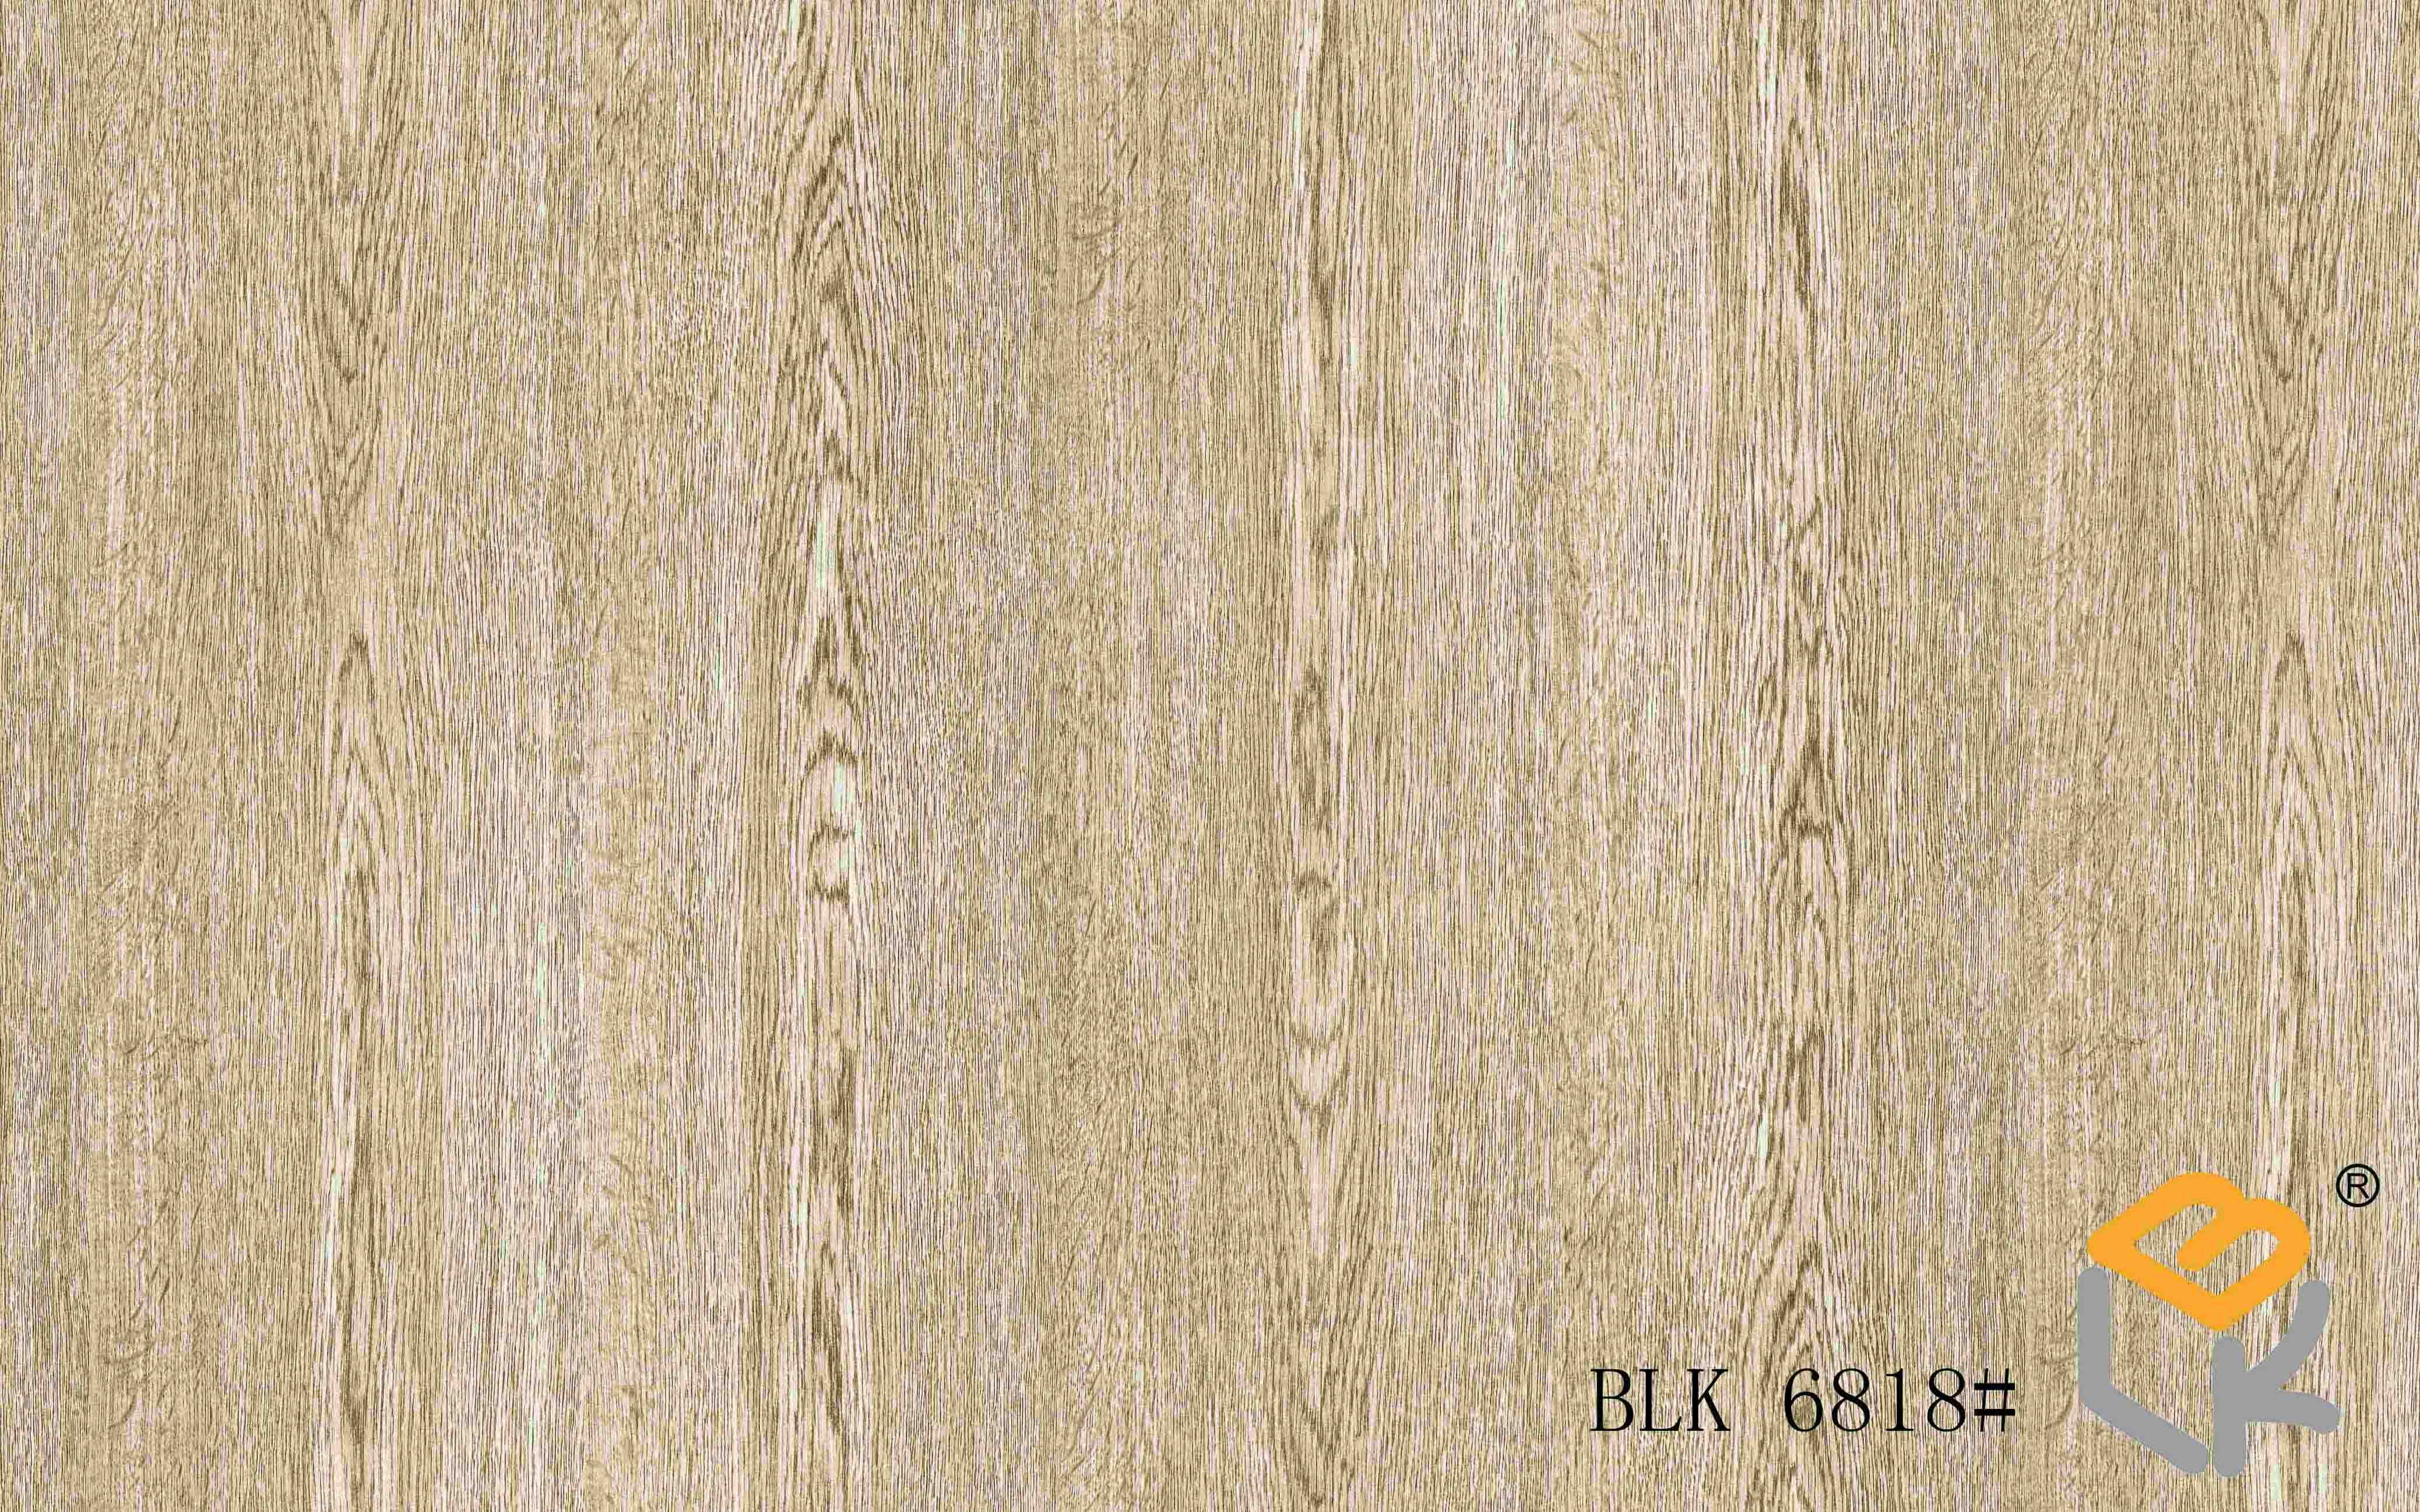 Oak woodgrain plywood from BLK Decor